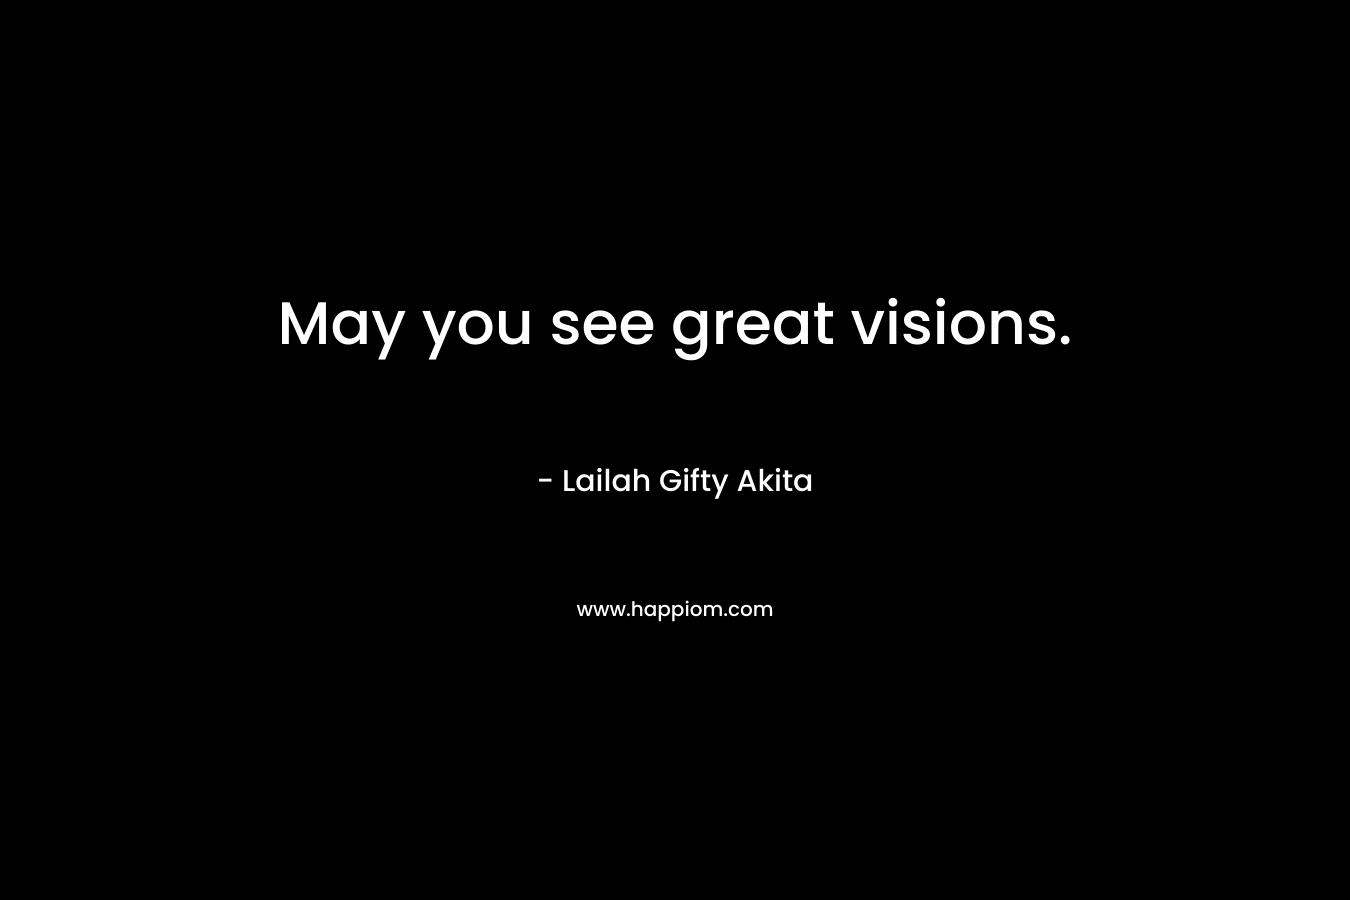 May you see great visions.